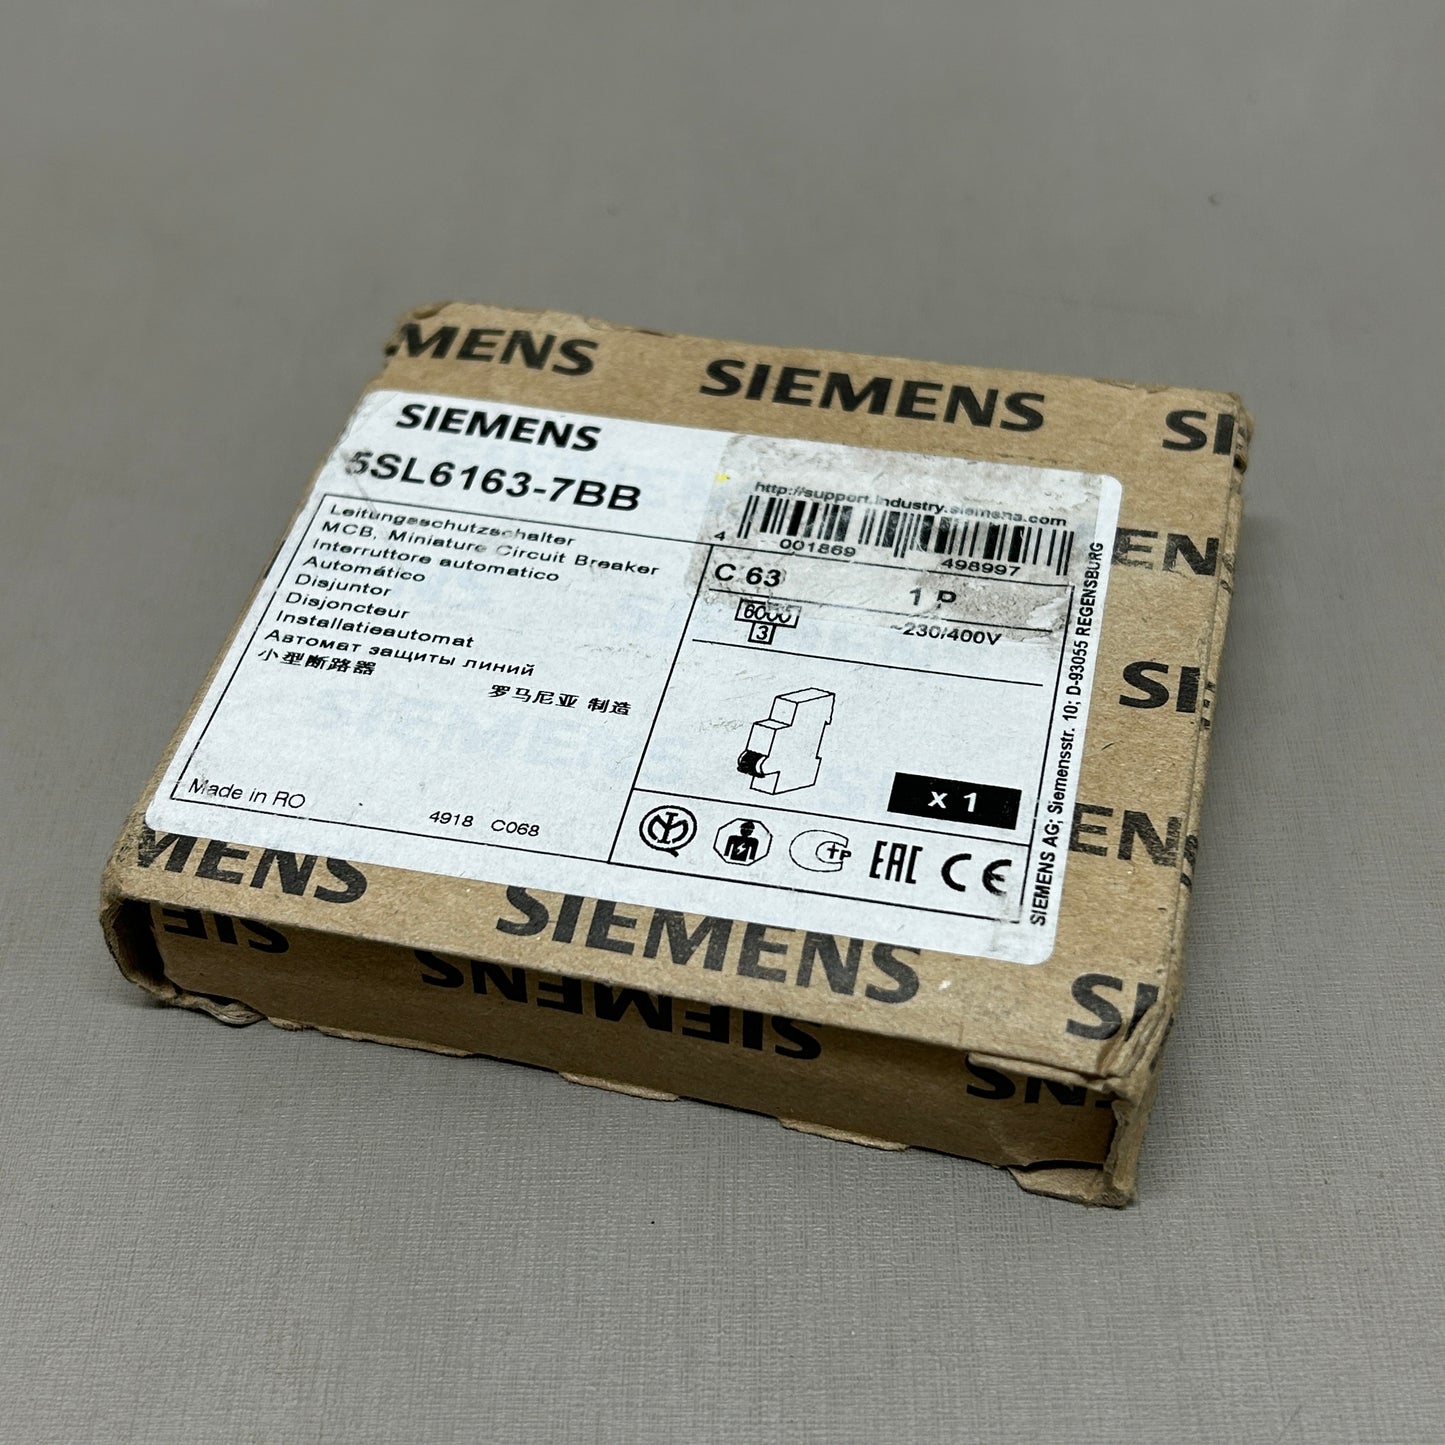 SIEMENS Miniature Circuit Breaker 230/400 V 6kA Off-White 5SL6163-7BB (New)